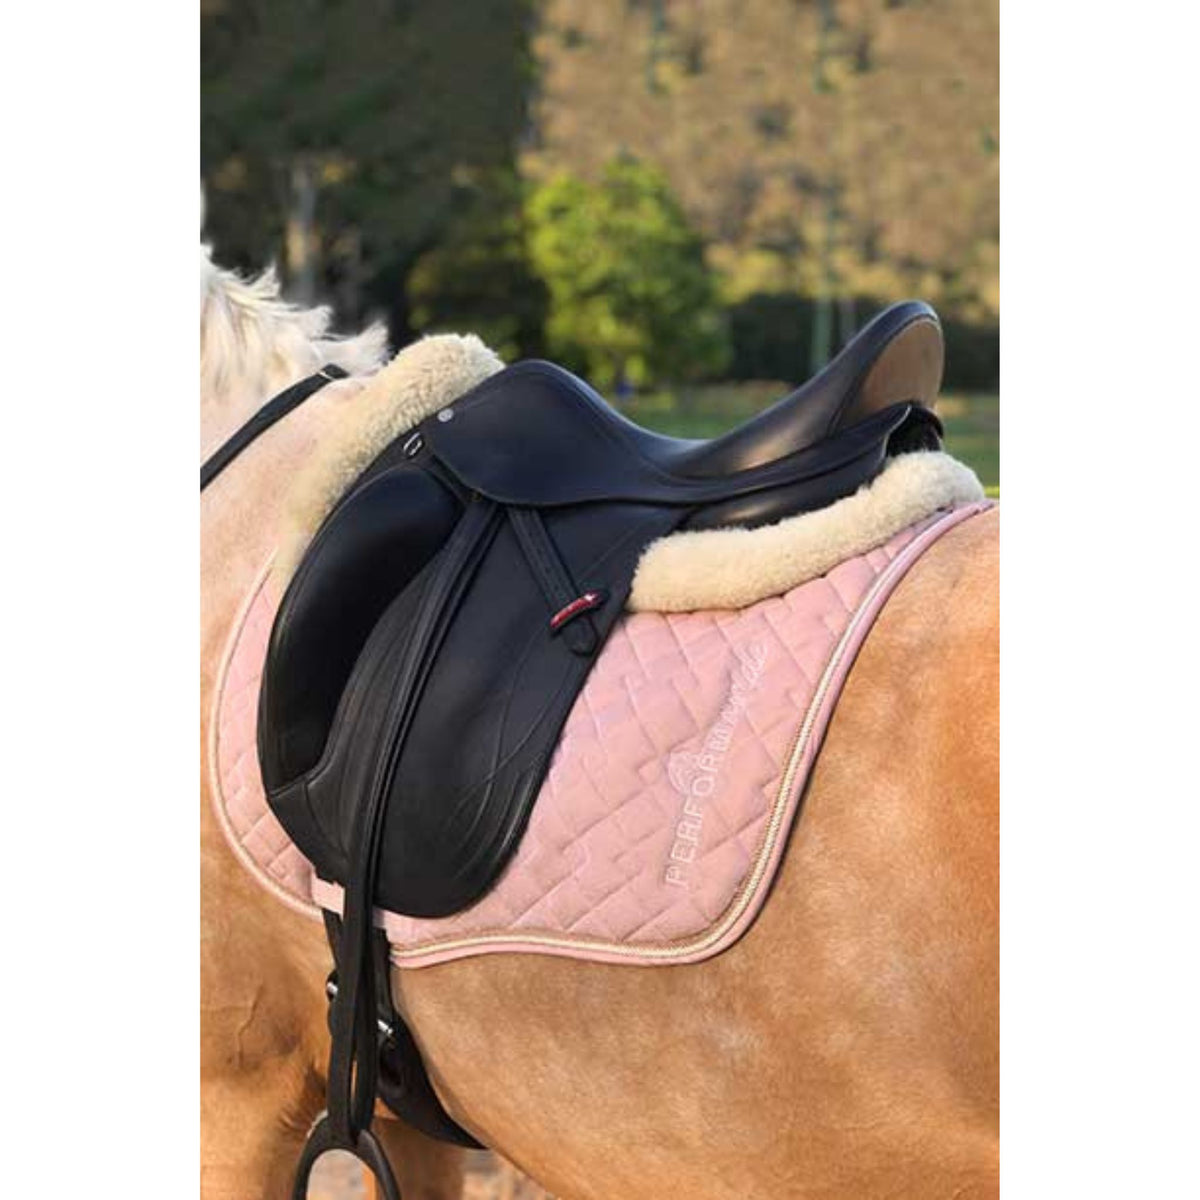 Palomino wearing a pink glitter saddle pad with white trim.